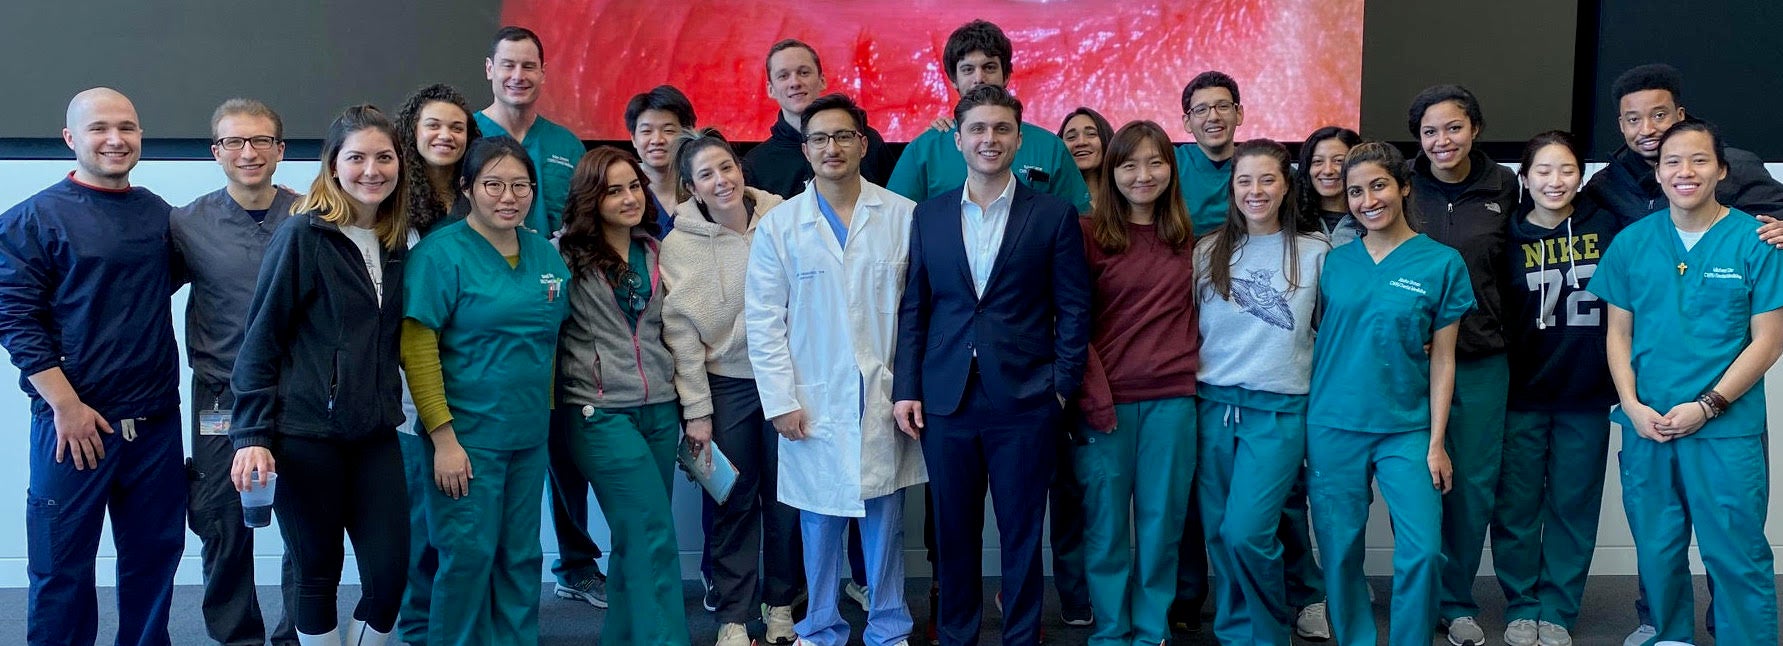 Group photo of CWRU Hispanic Student Dental Association members pre-COVID